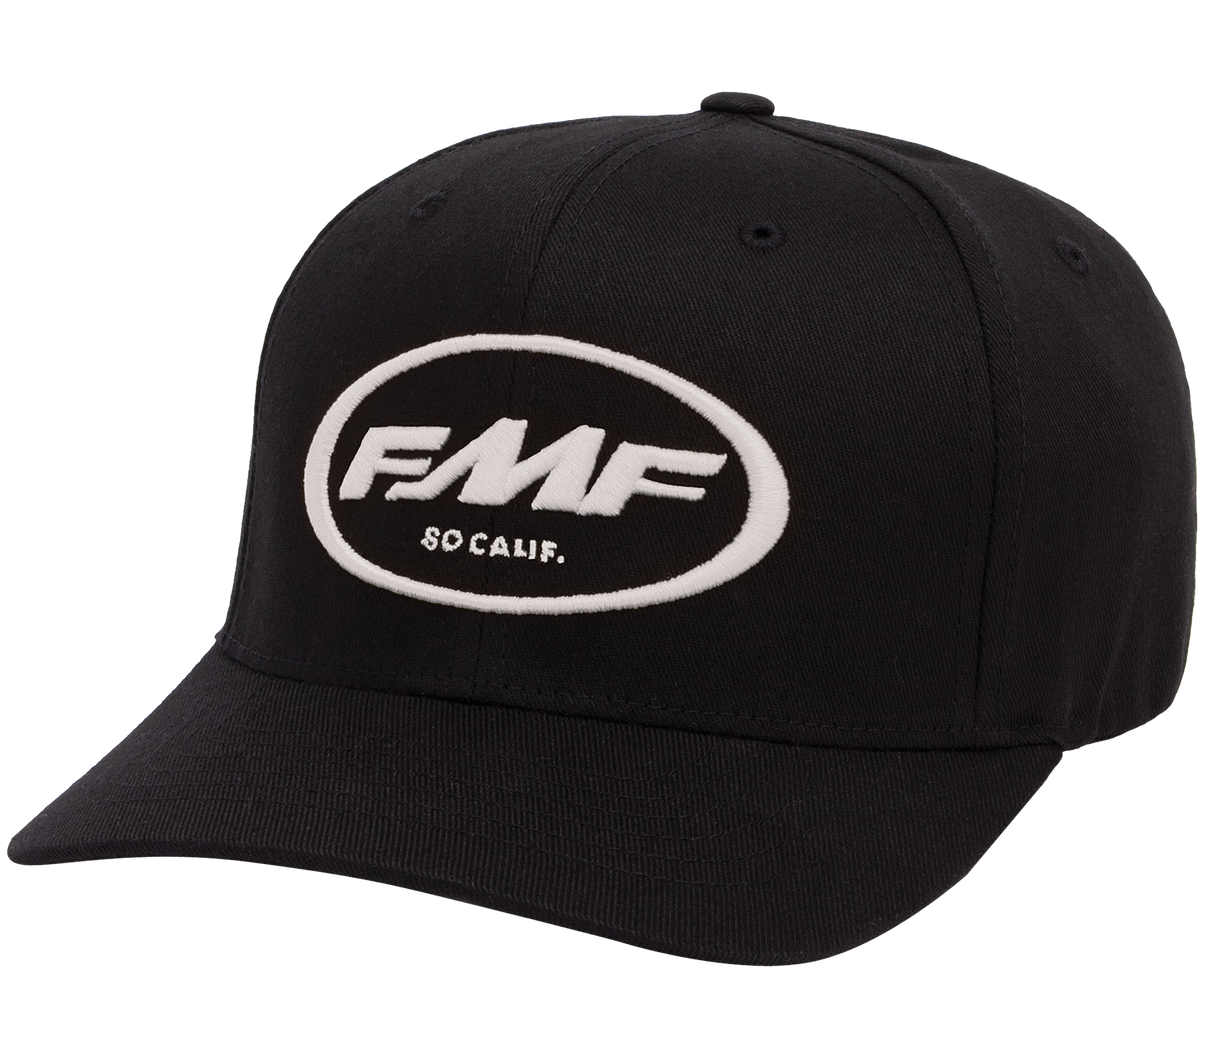 FMF Factory Classic Don 2 Hat - Black